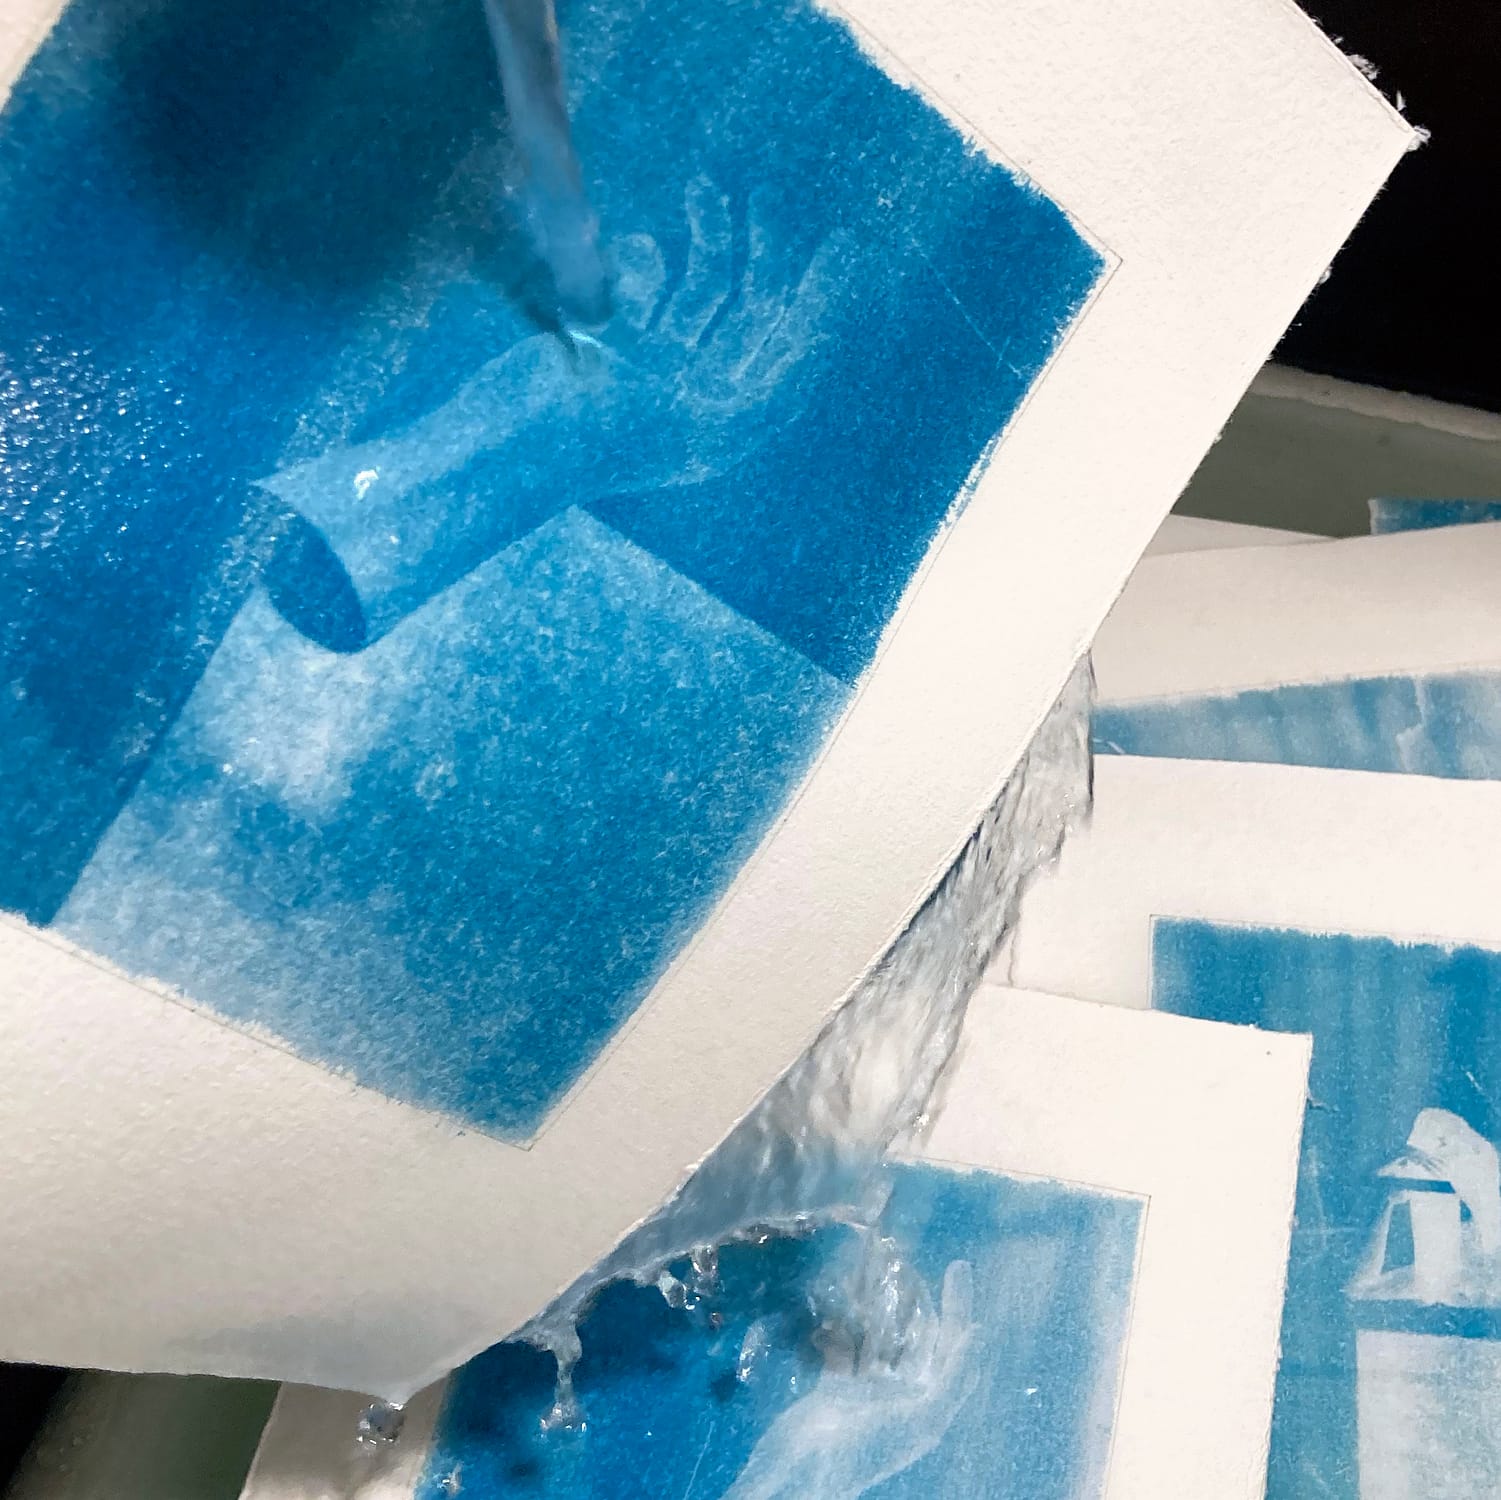 Cyanotype • analog photographic process